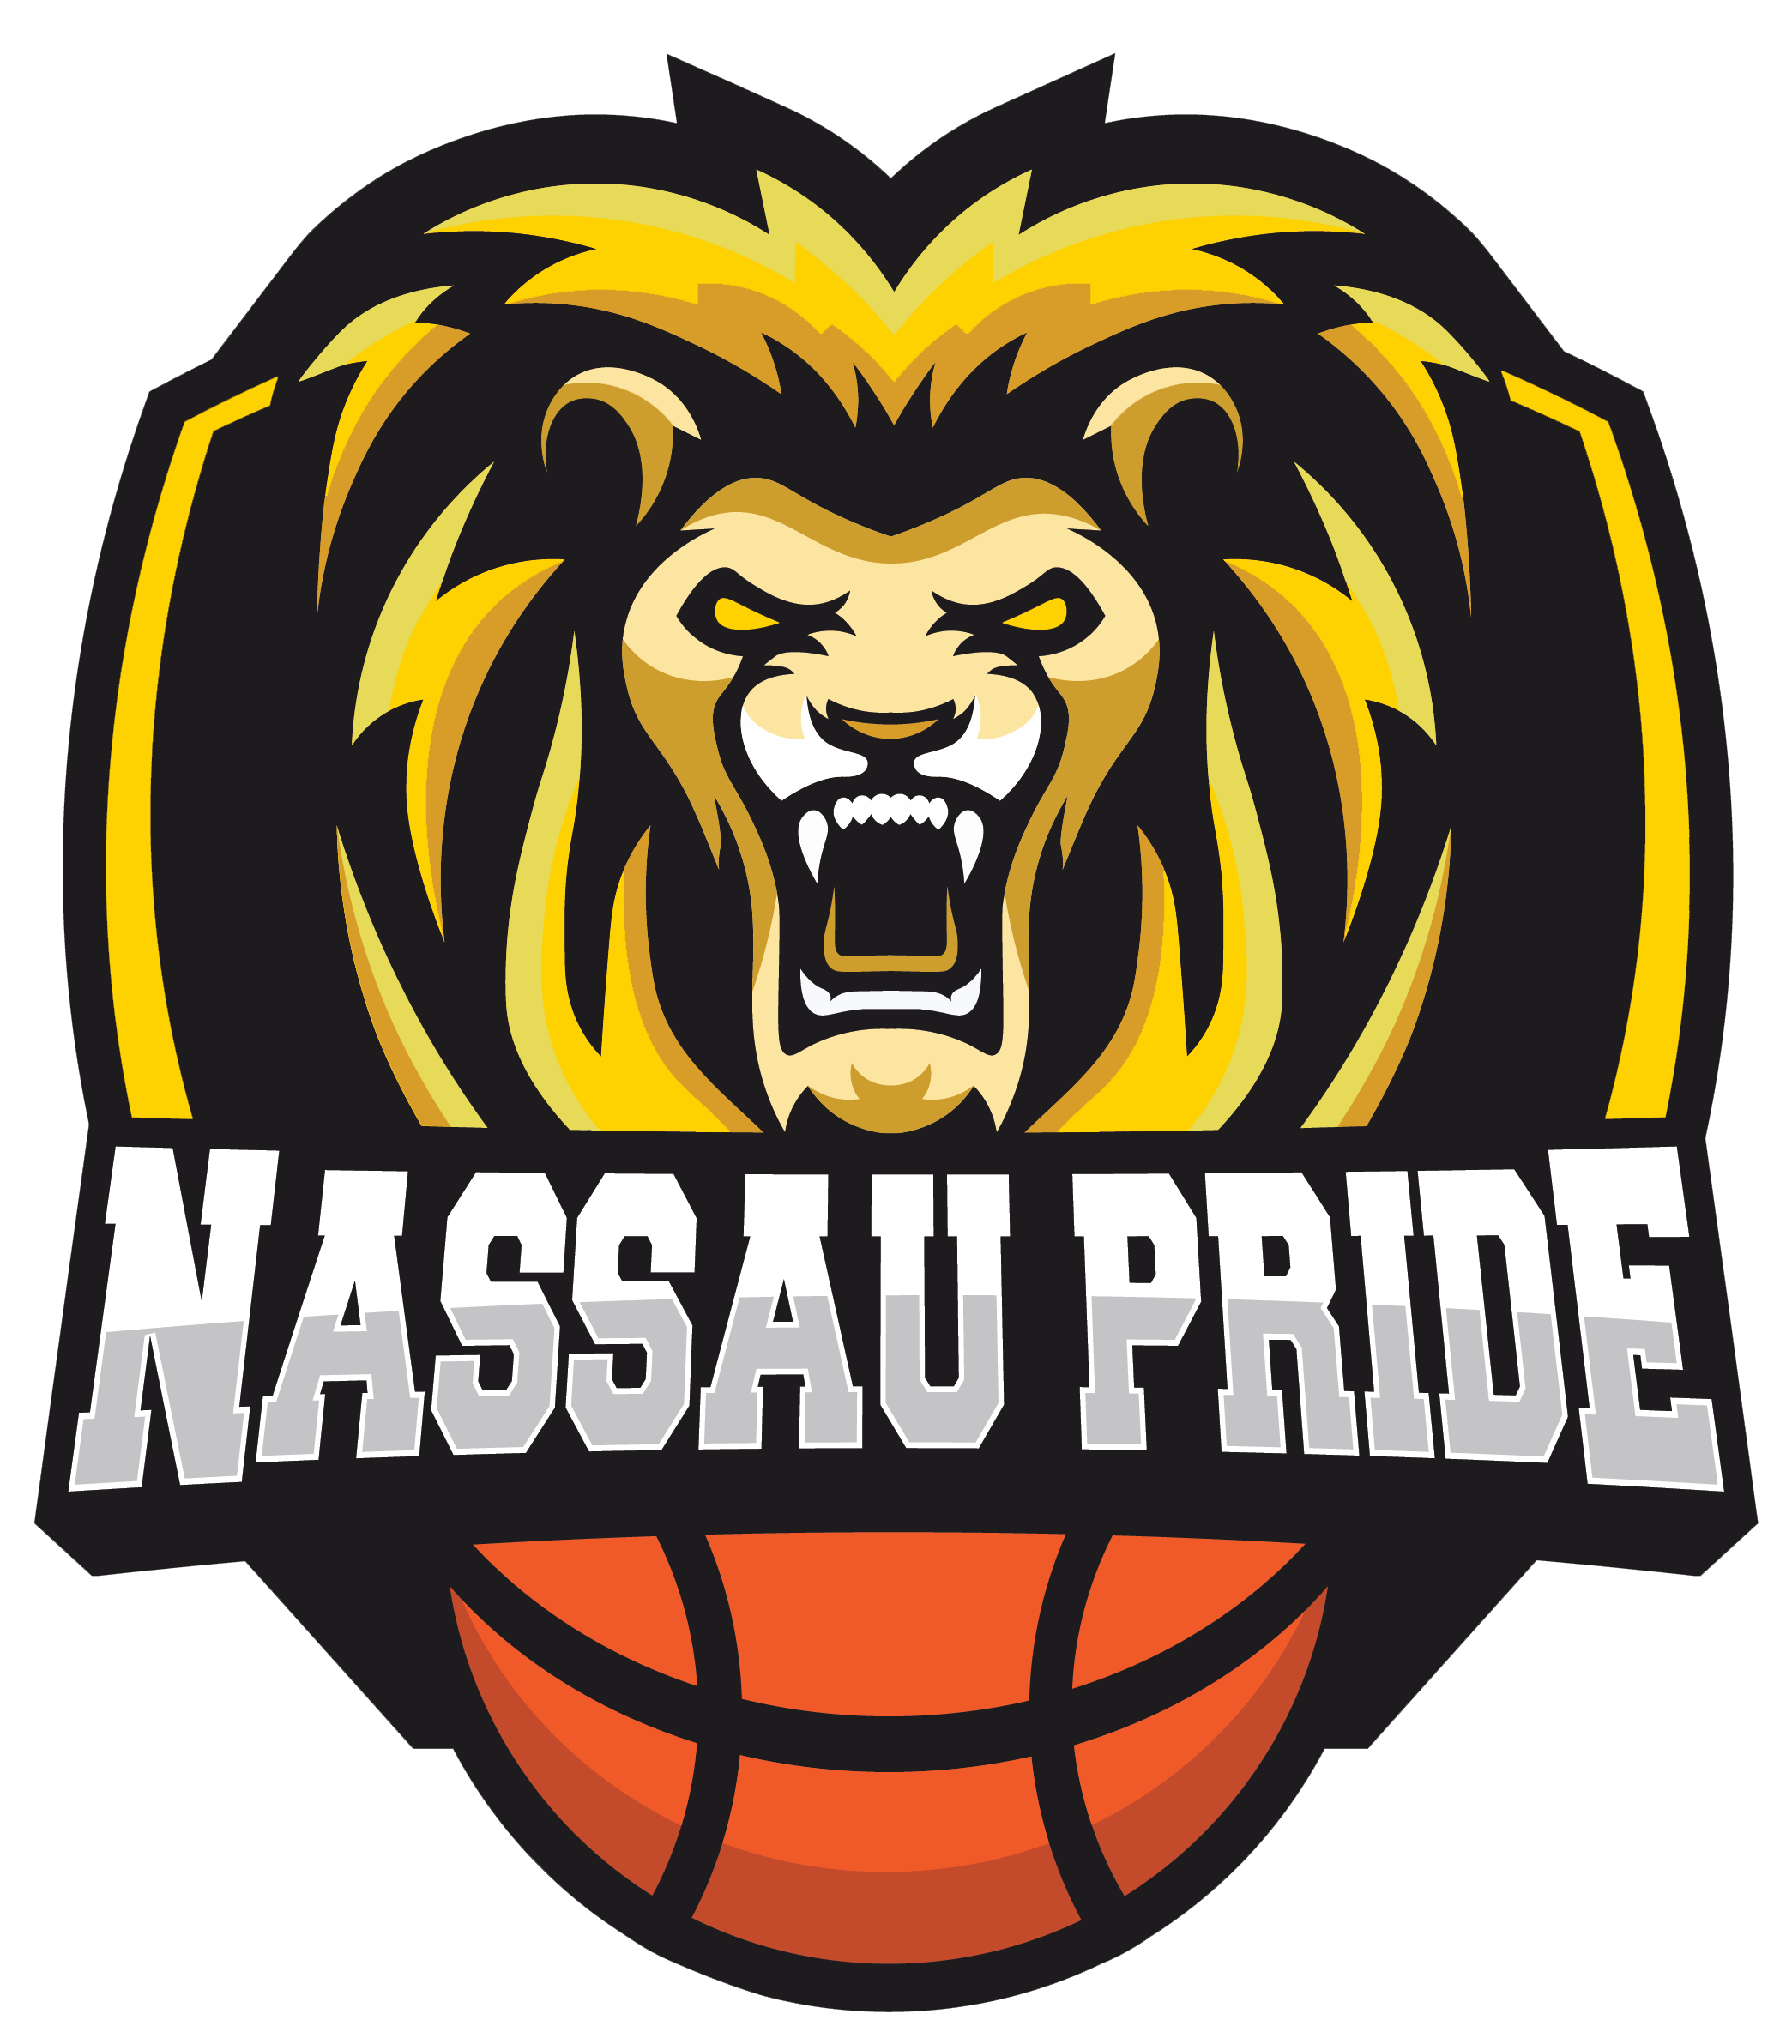 Nassau Pride - ABA Professional Basketball